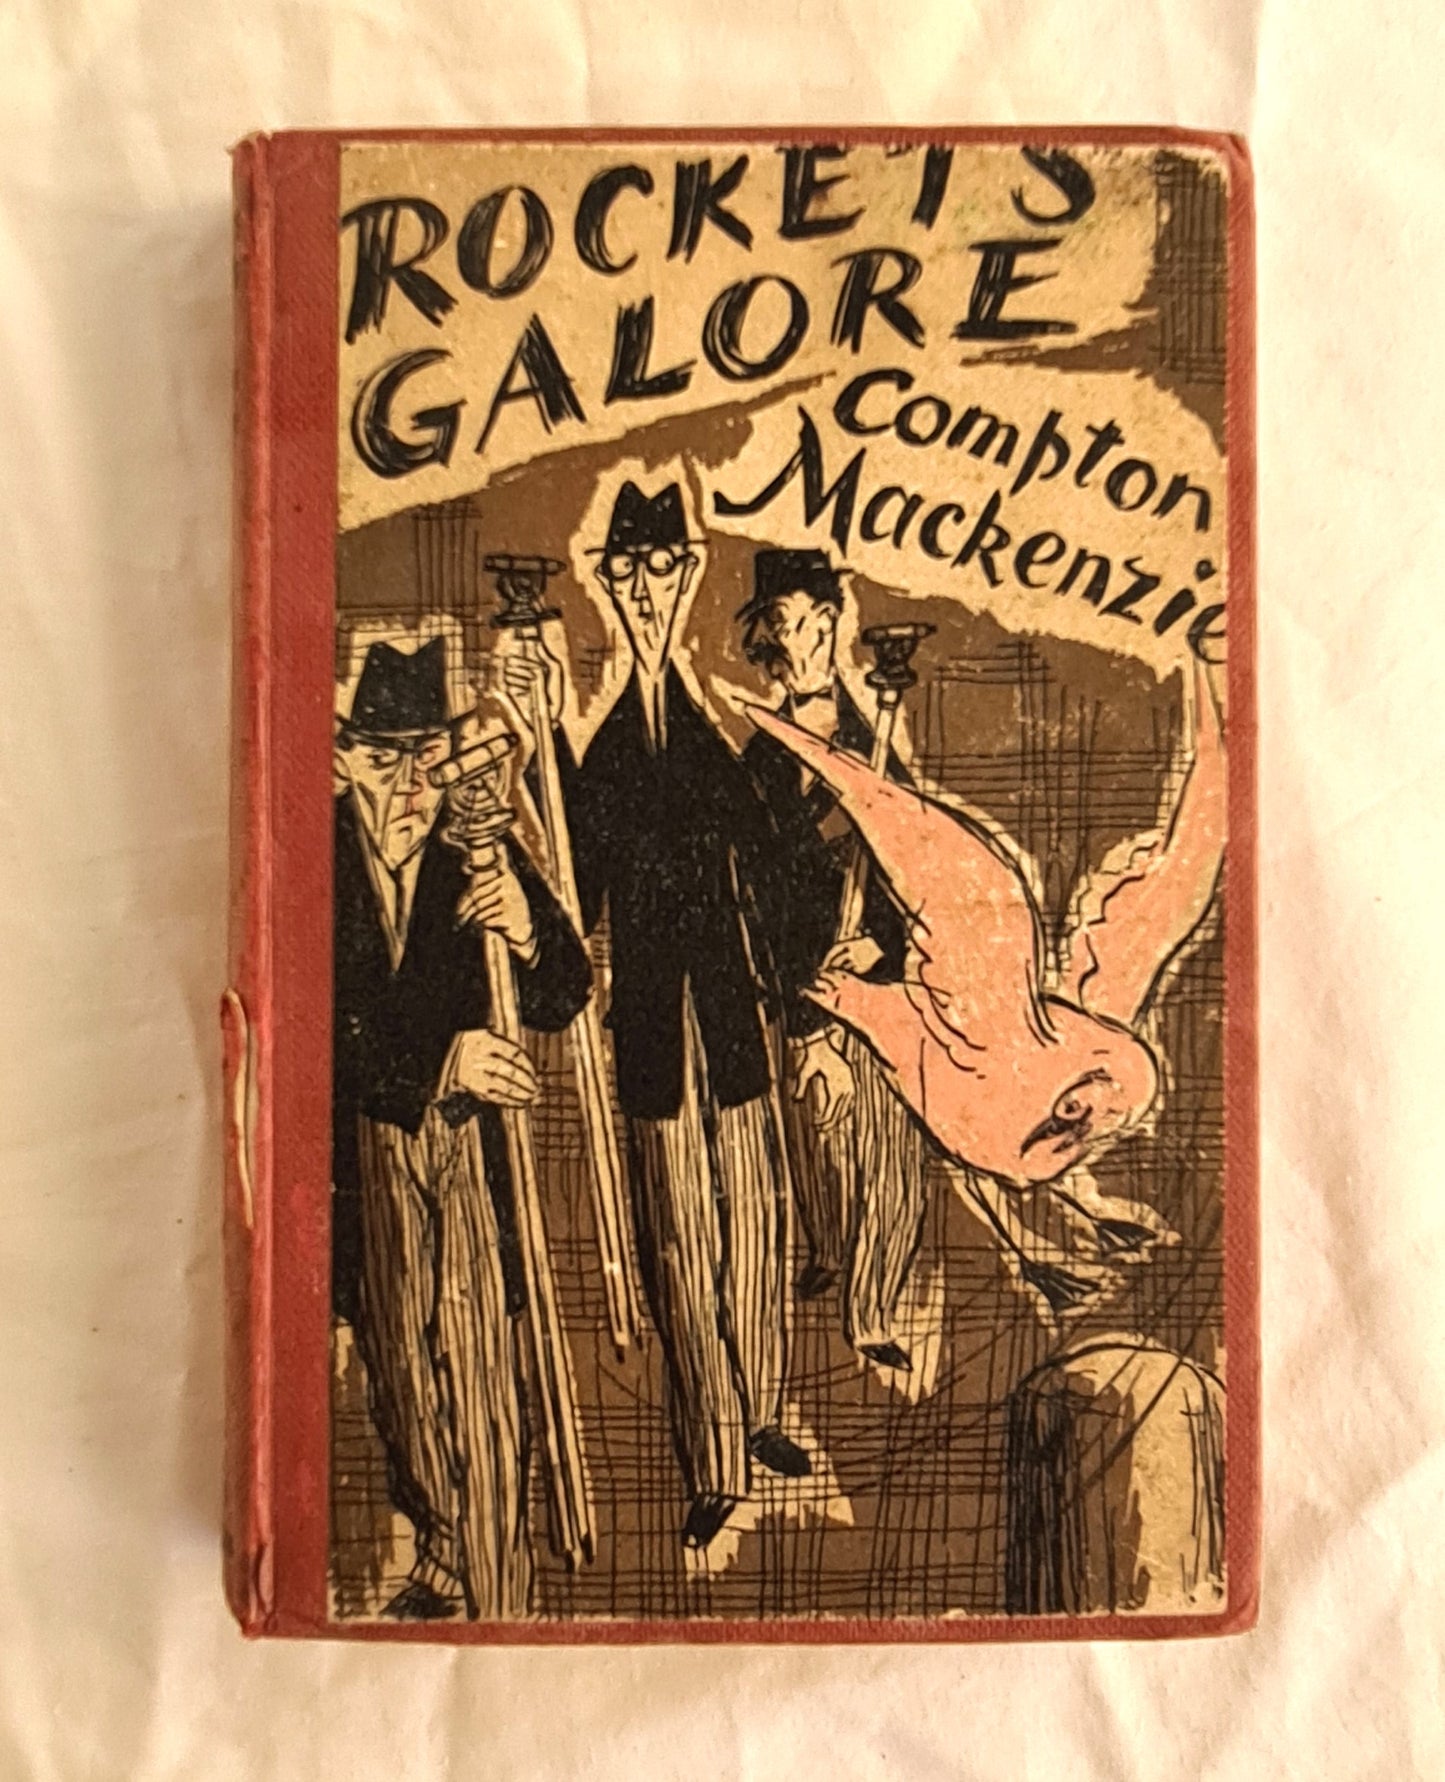 Rockets Galore by Compton Mackenzie